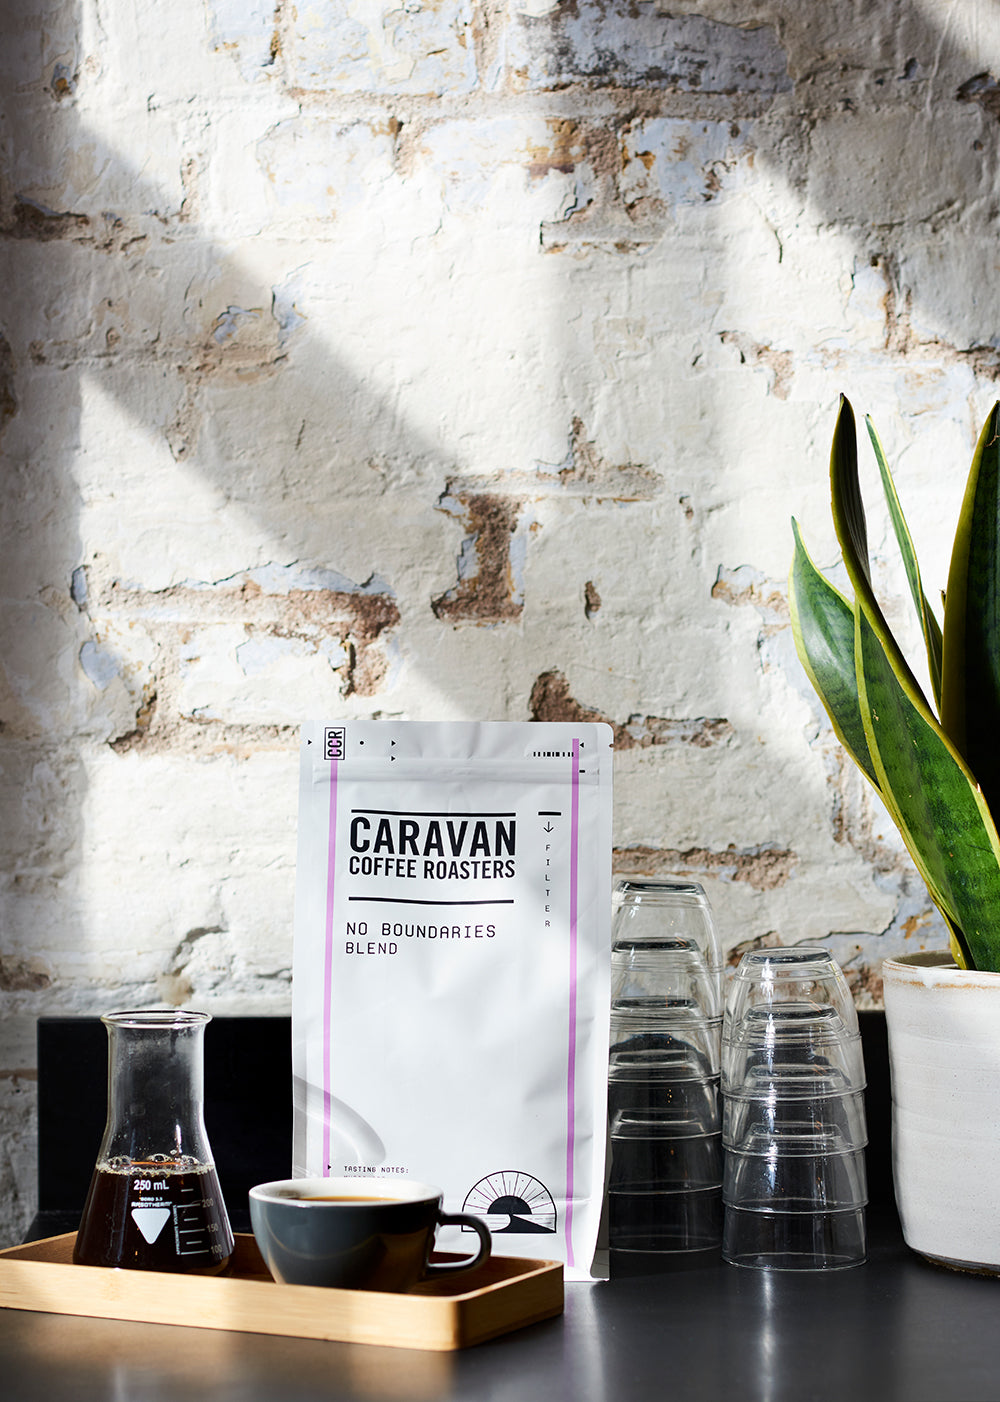 Contact Caravan Coffee Roasters